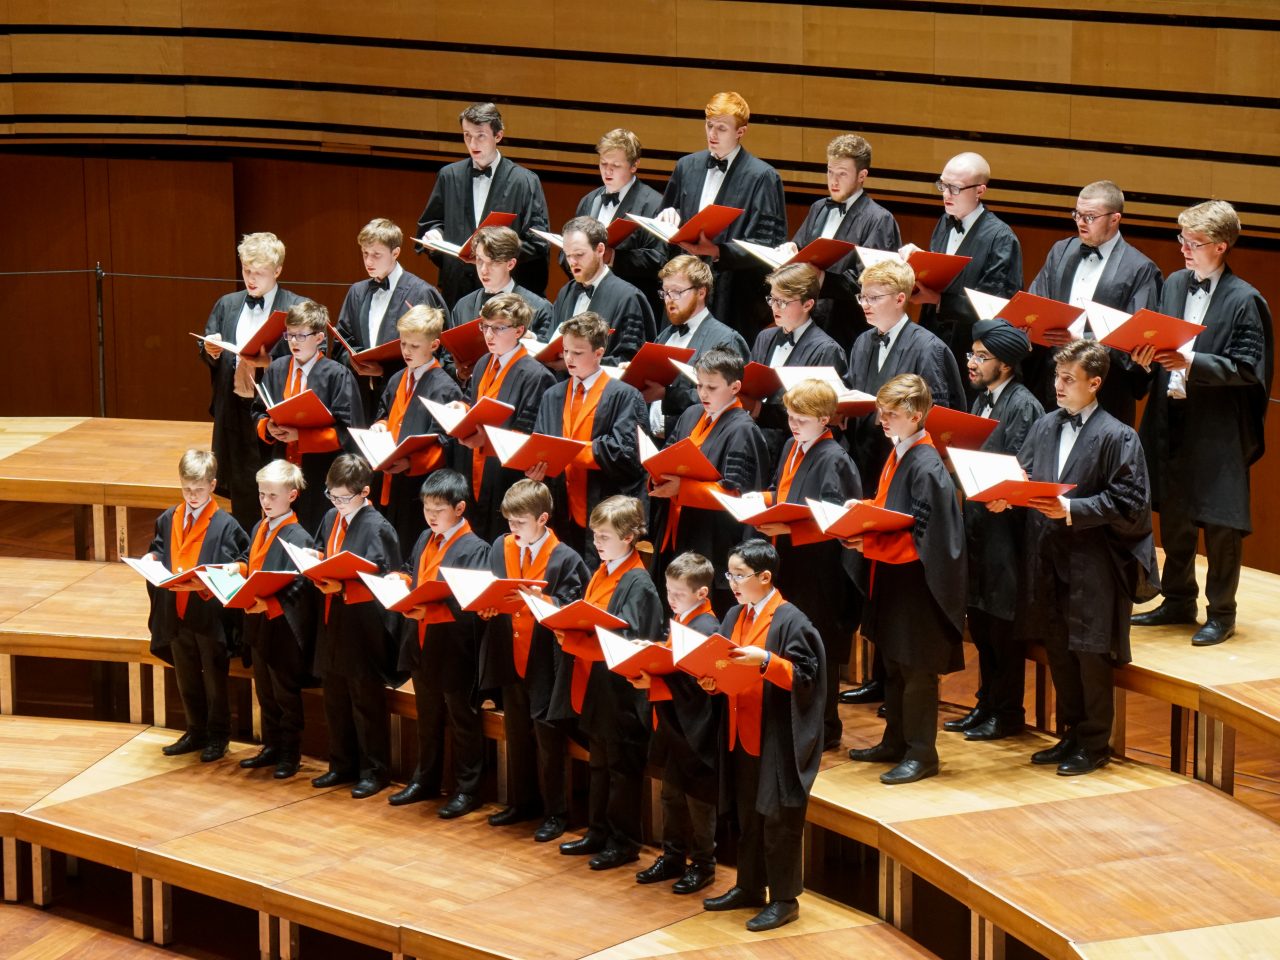 The Choir of St John’s College o.l.v. Christopher Gray